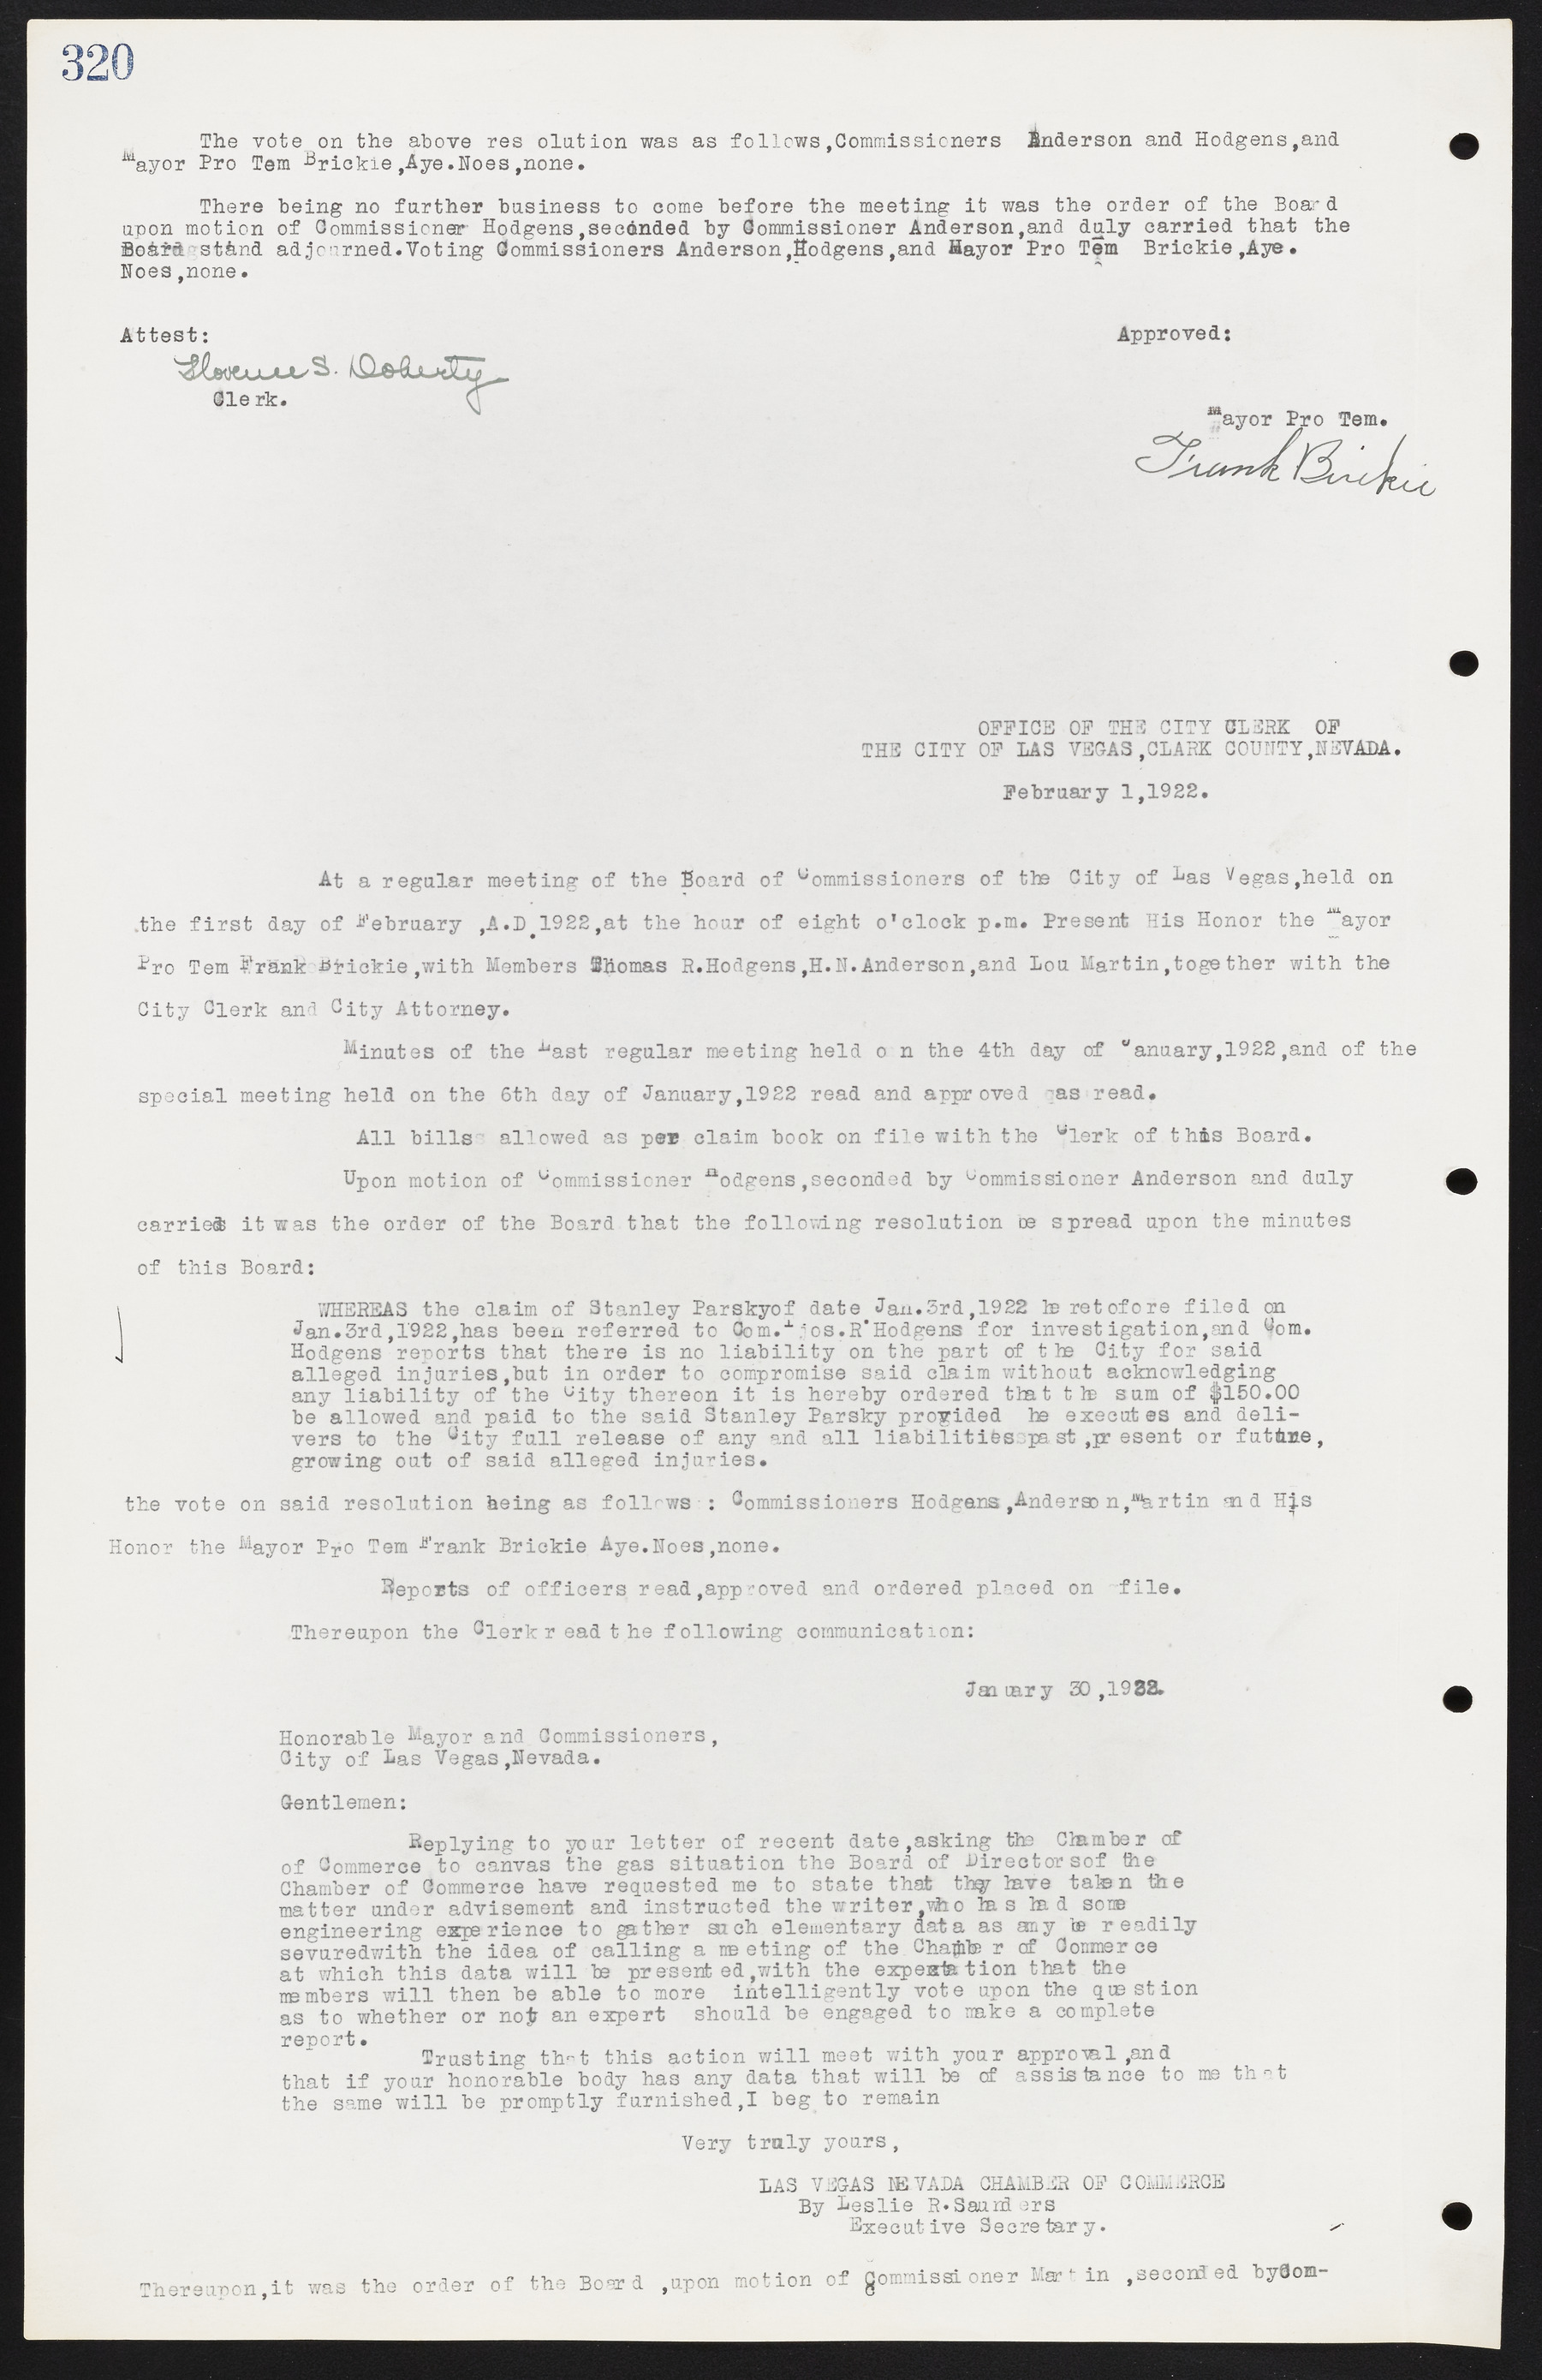 Las Vegas City Commission Minutes, June 22, 1911 to February 7, 1922, lvc000001-336